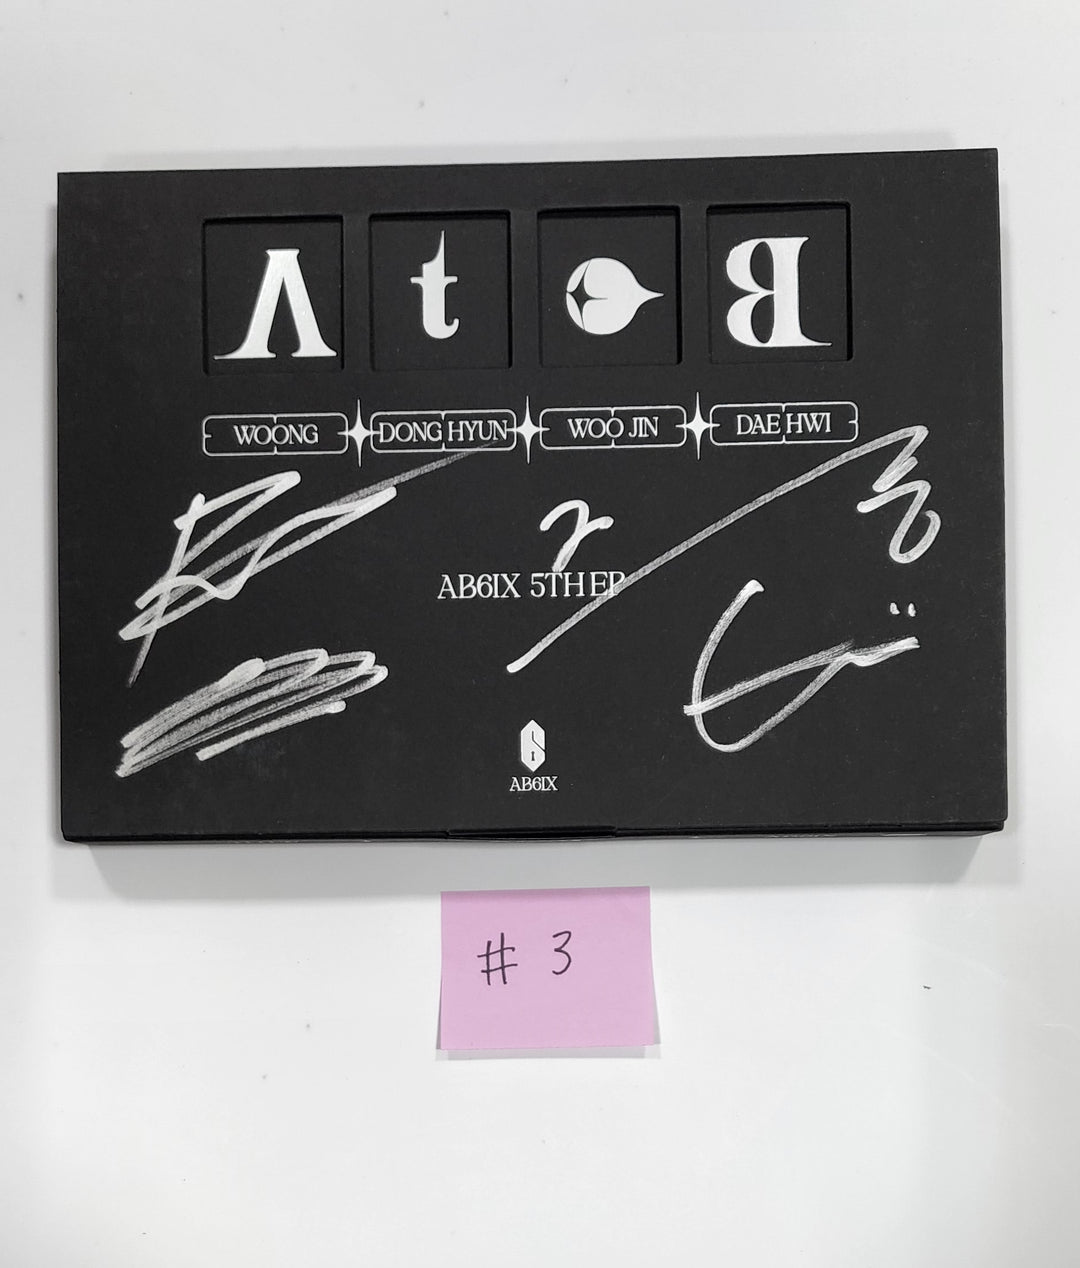 AB6IX "A to B" - Hand Autographed (Signed) Promo Album